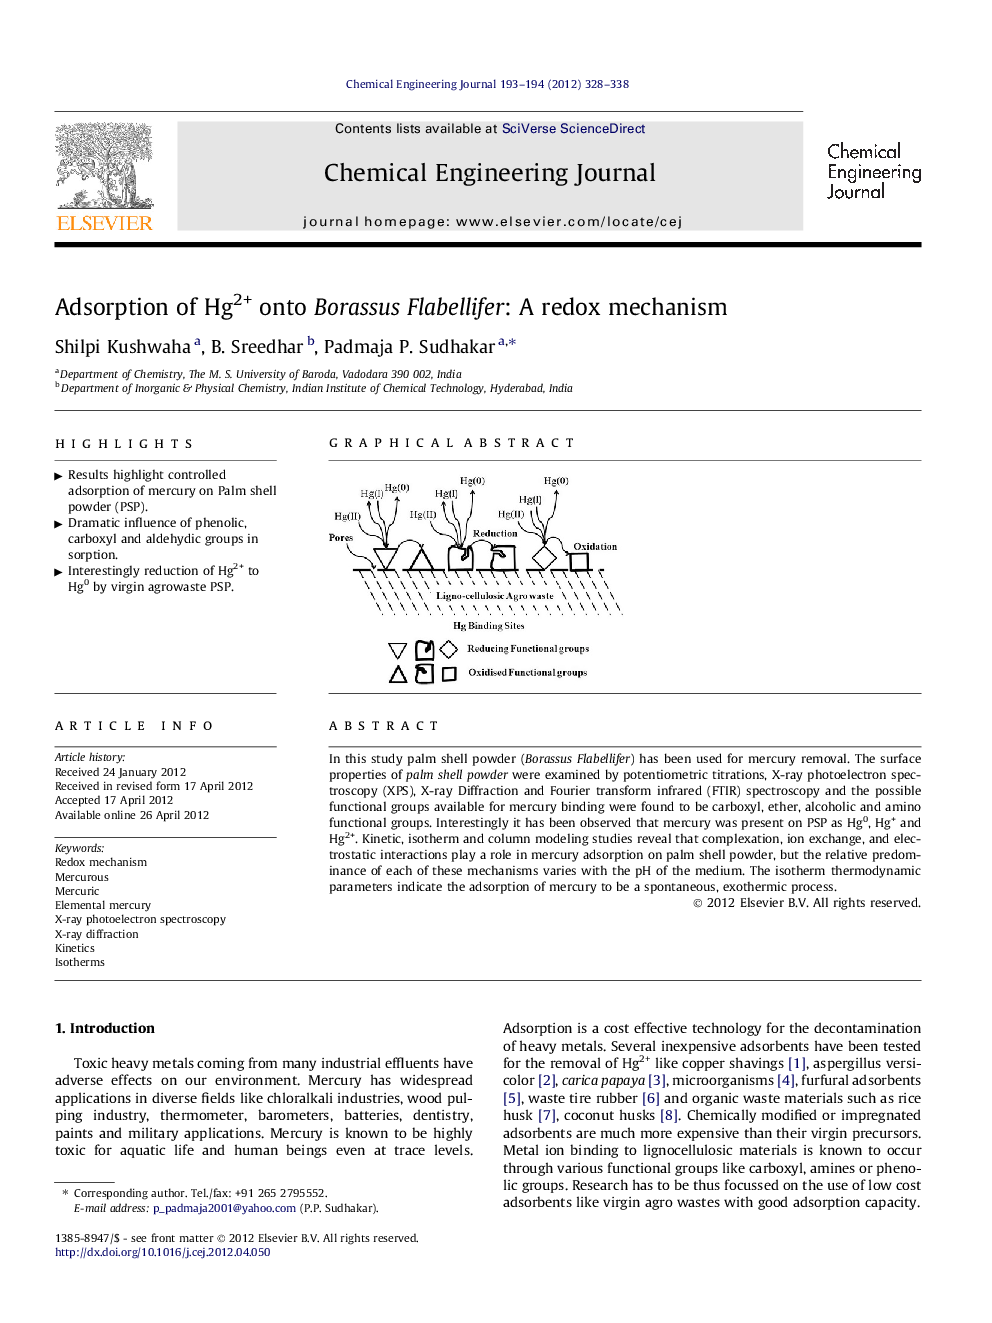 Adsorption of Hg2+ onto Borassus Flabellifer: A redox mechanism